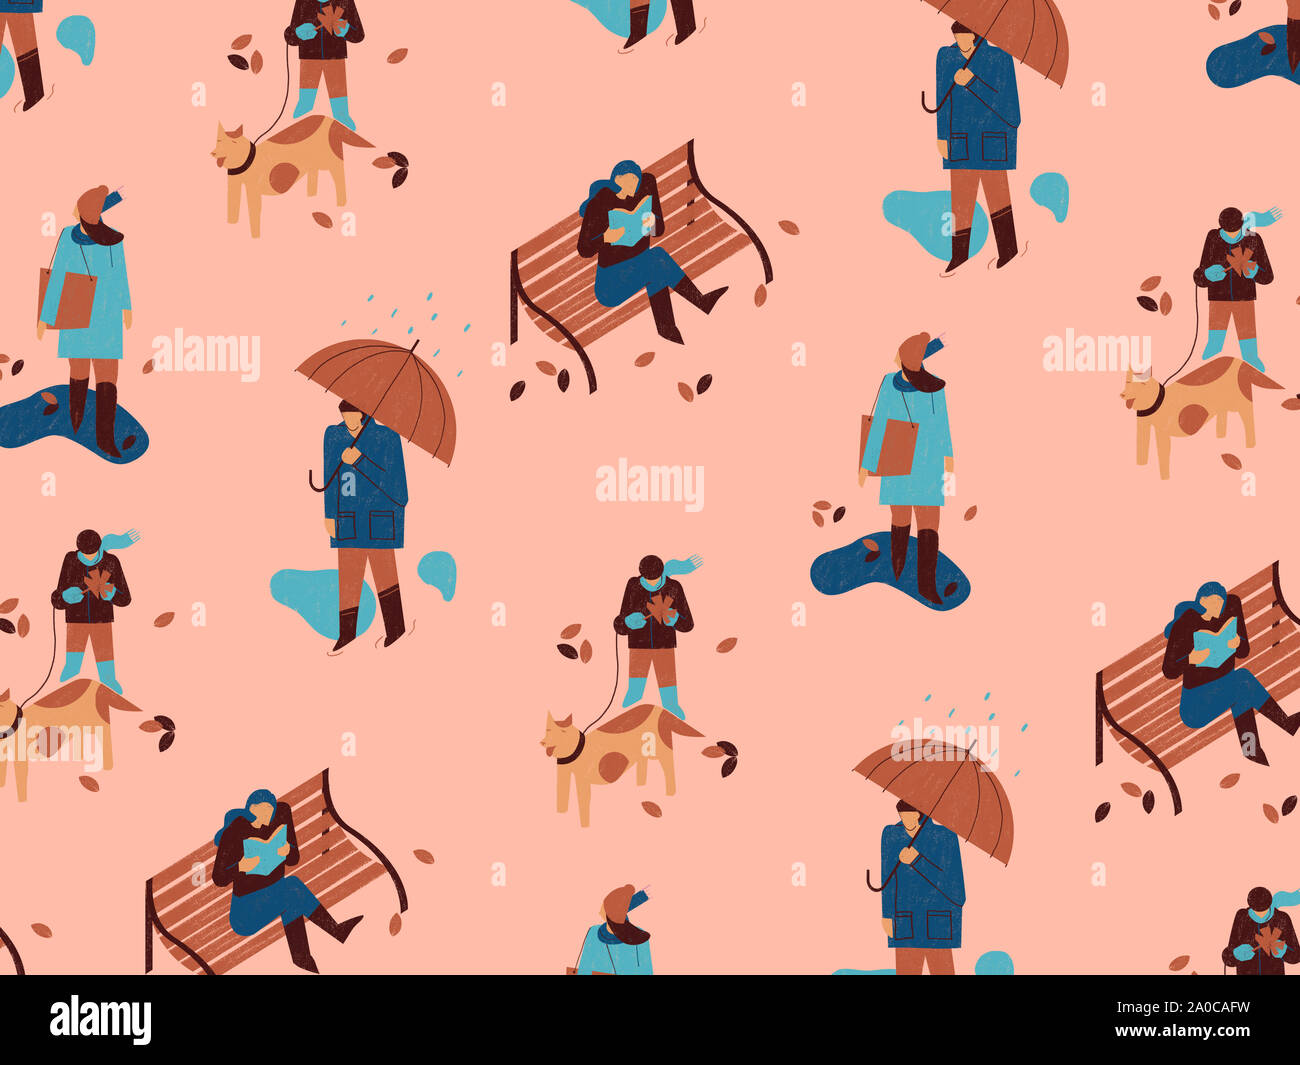 Autumn season resource illustration. People outside enjoying the autumnal season. Blue and brown colorful background. Stock Photo